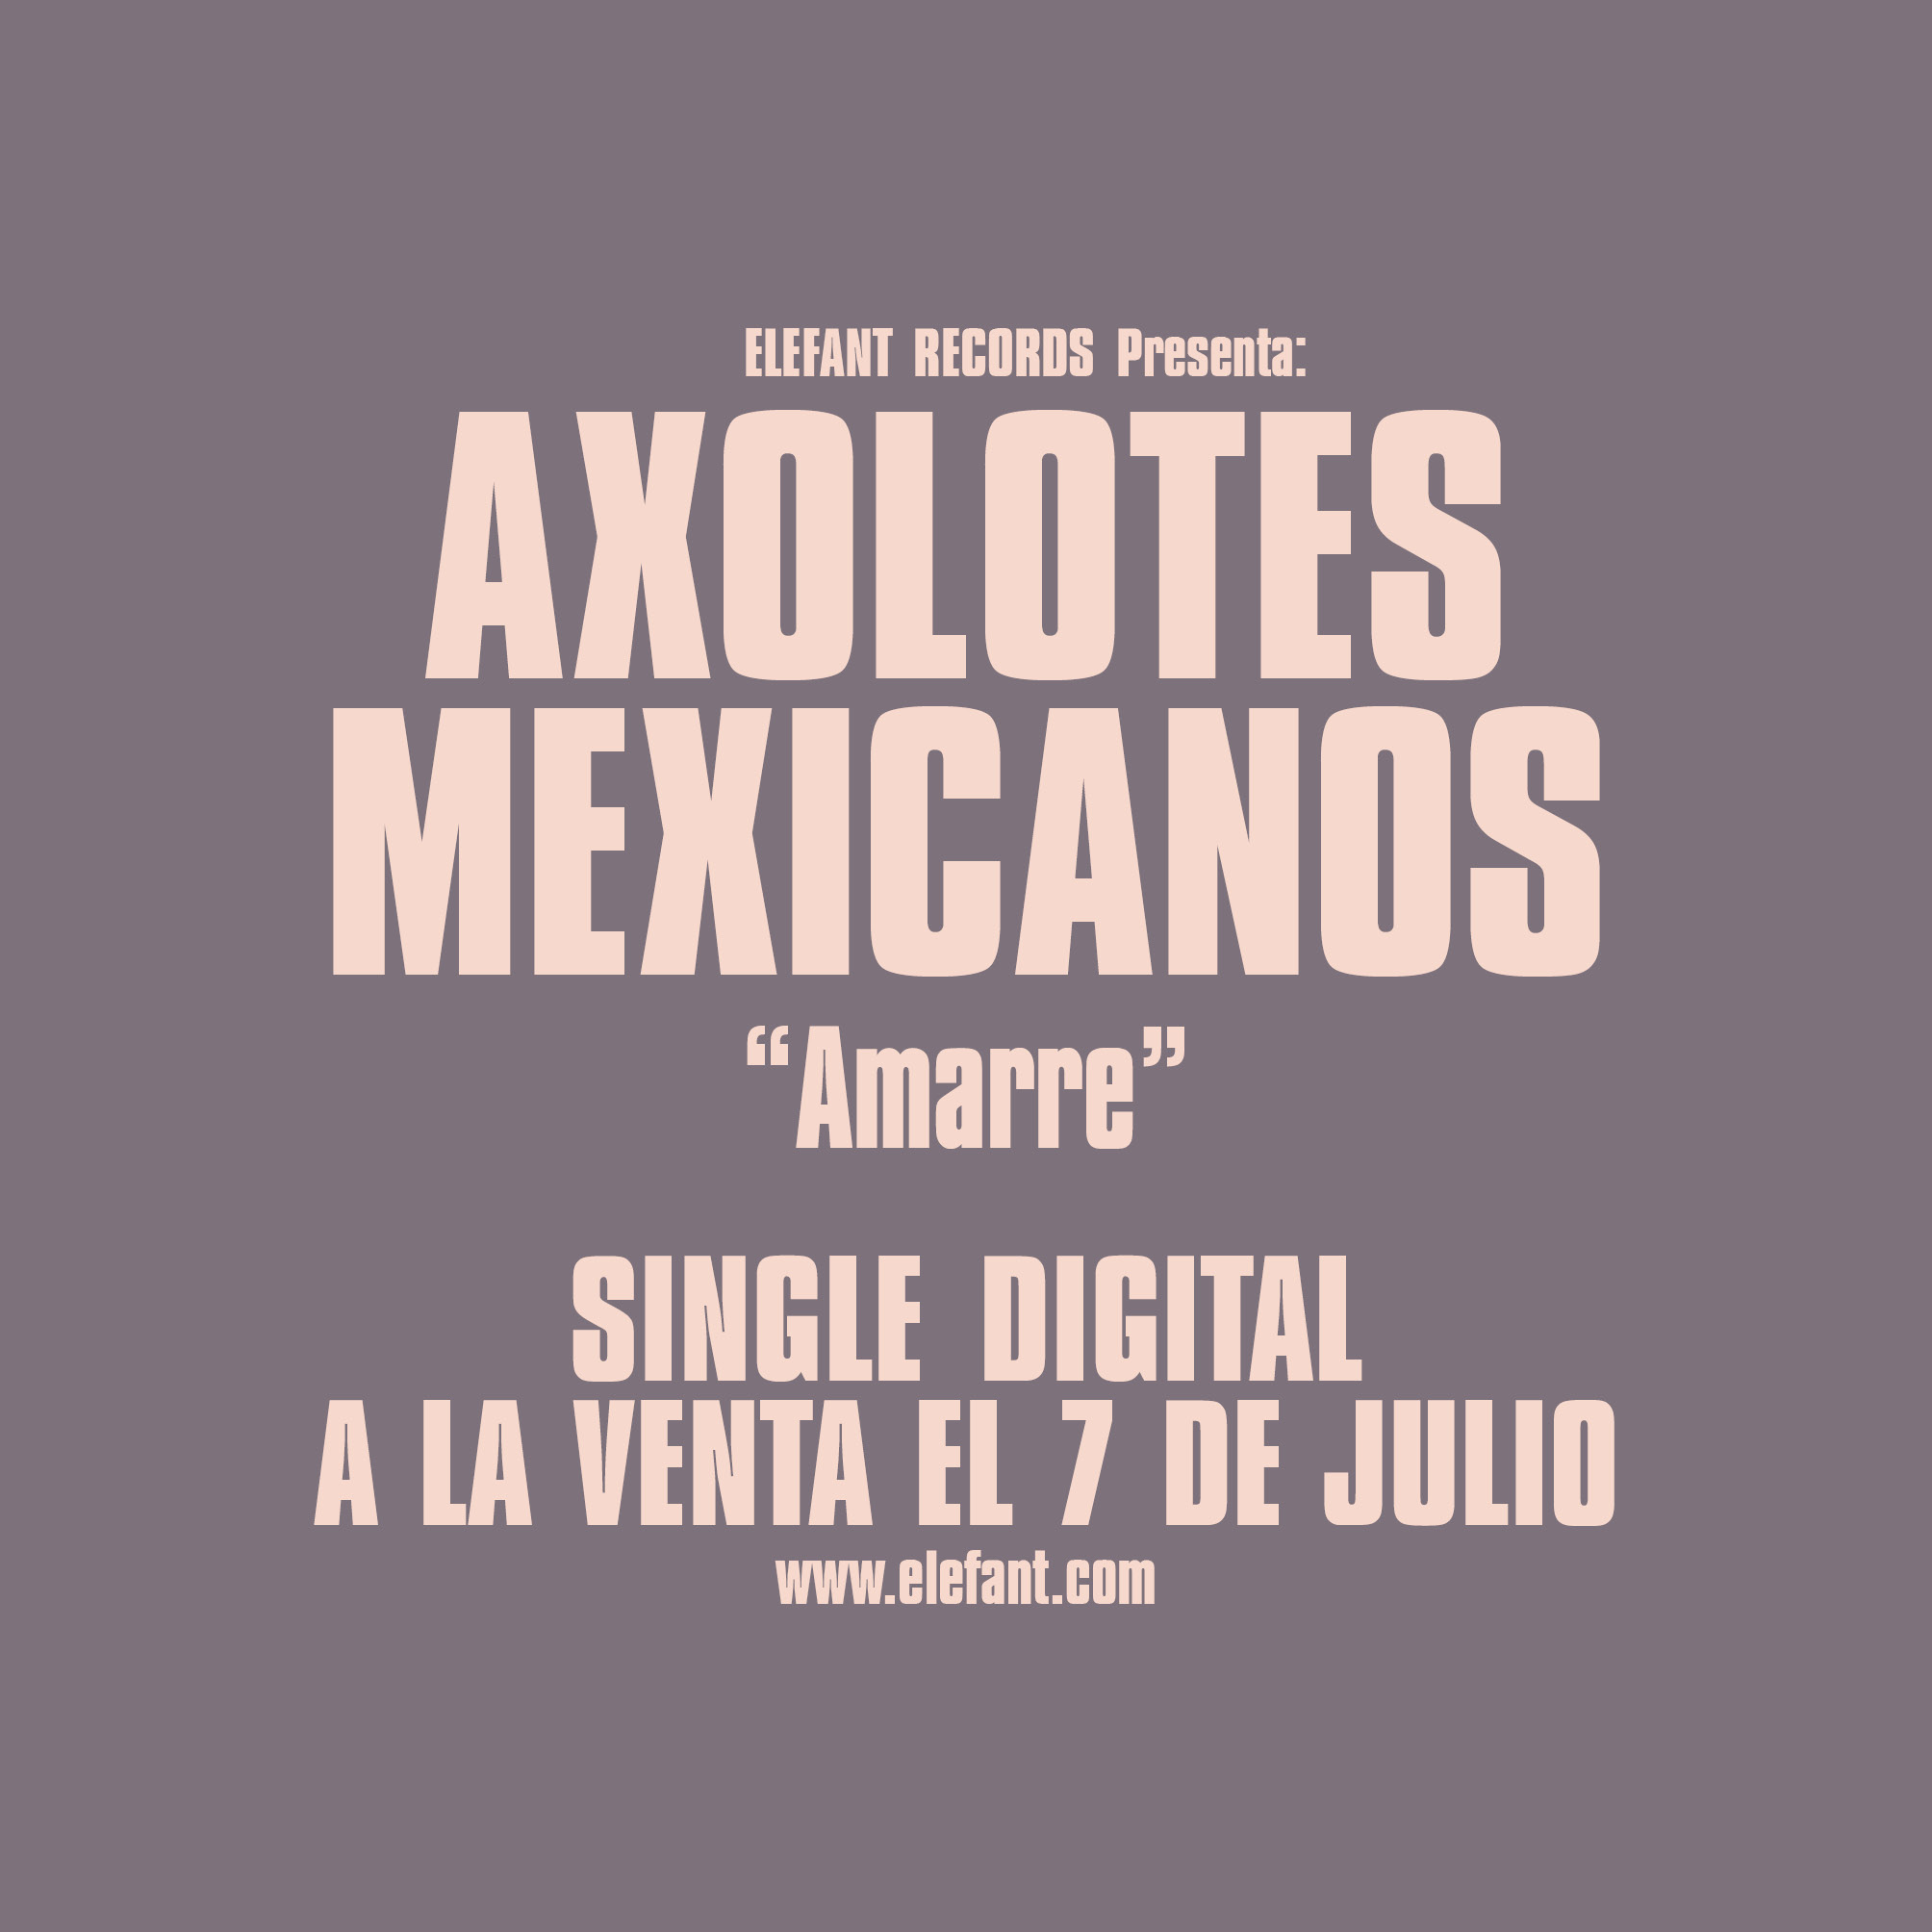 AXOLOTES MEXICANOS "Amarre" Single Digital 